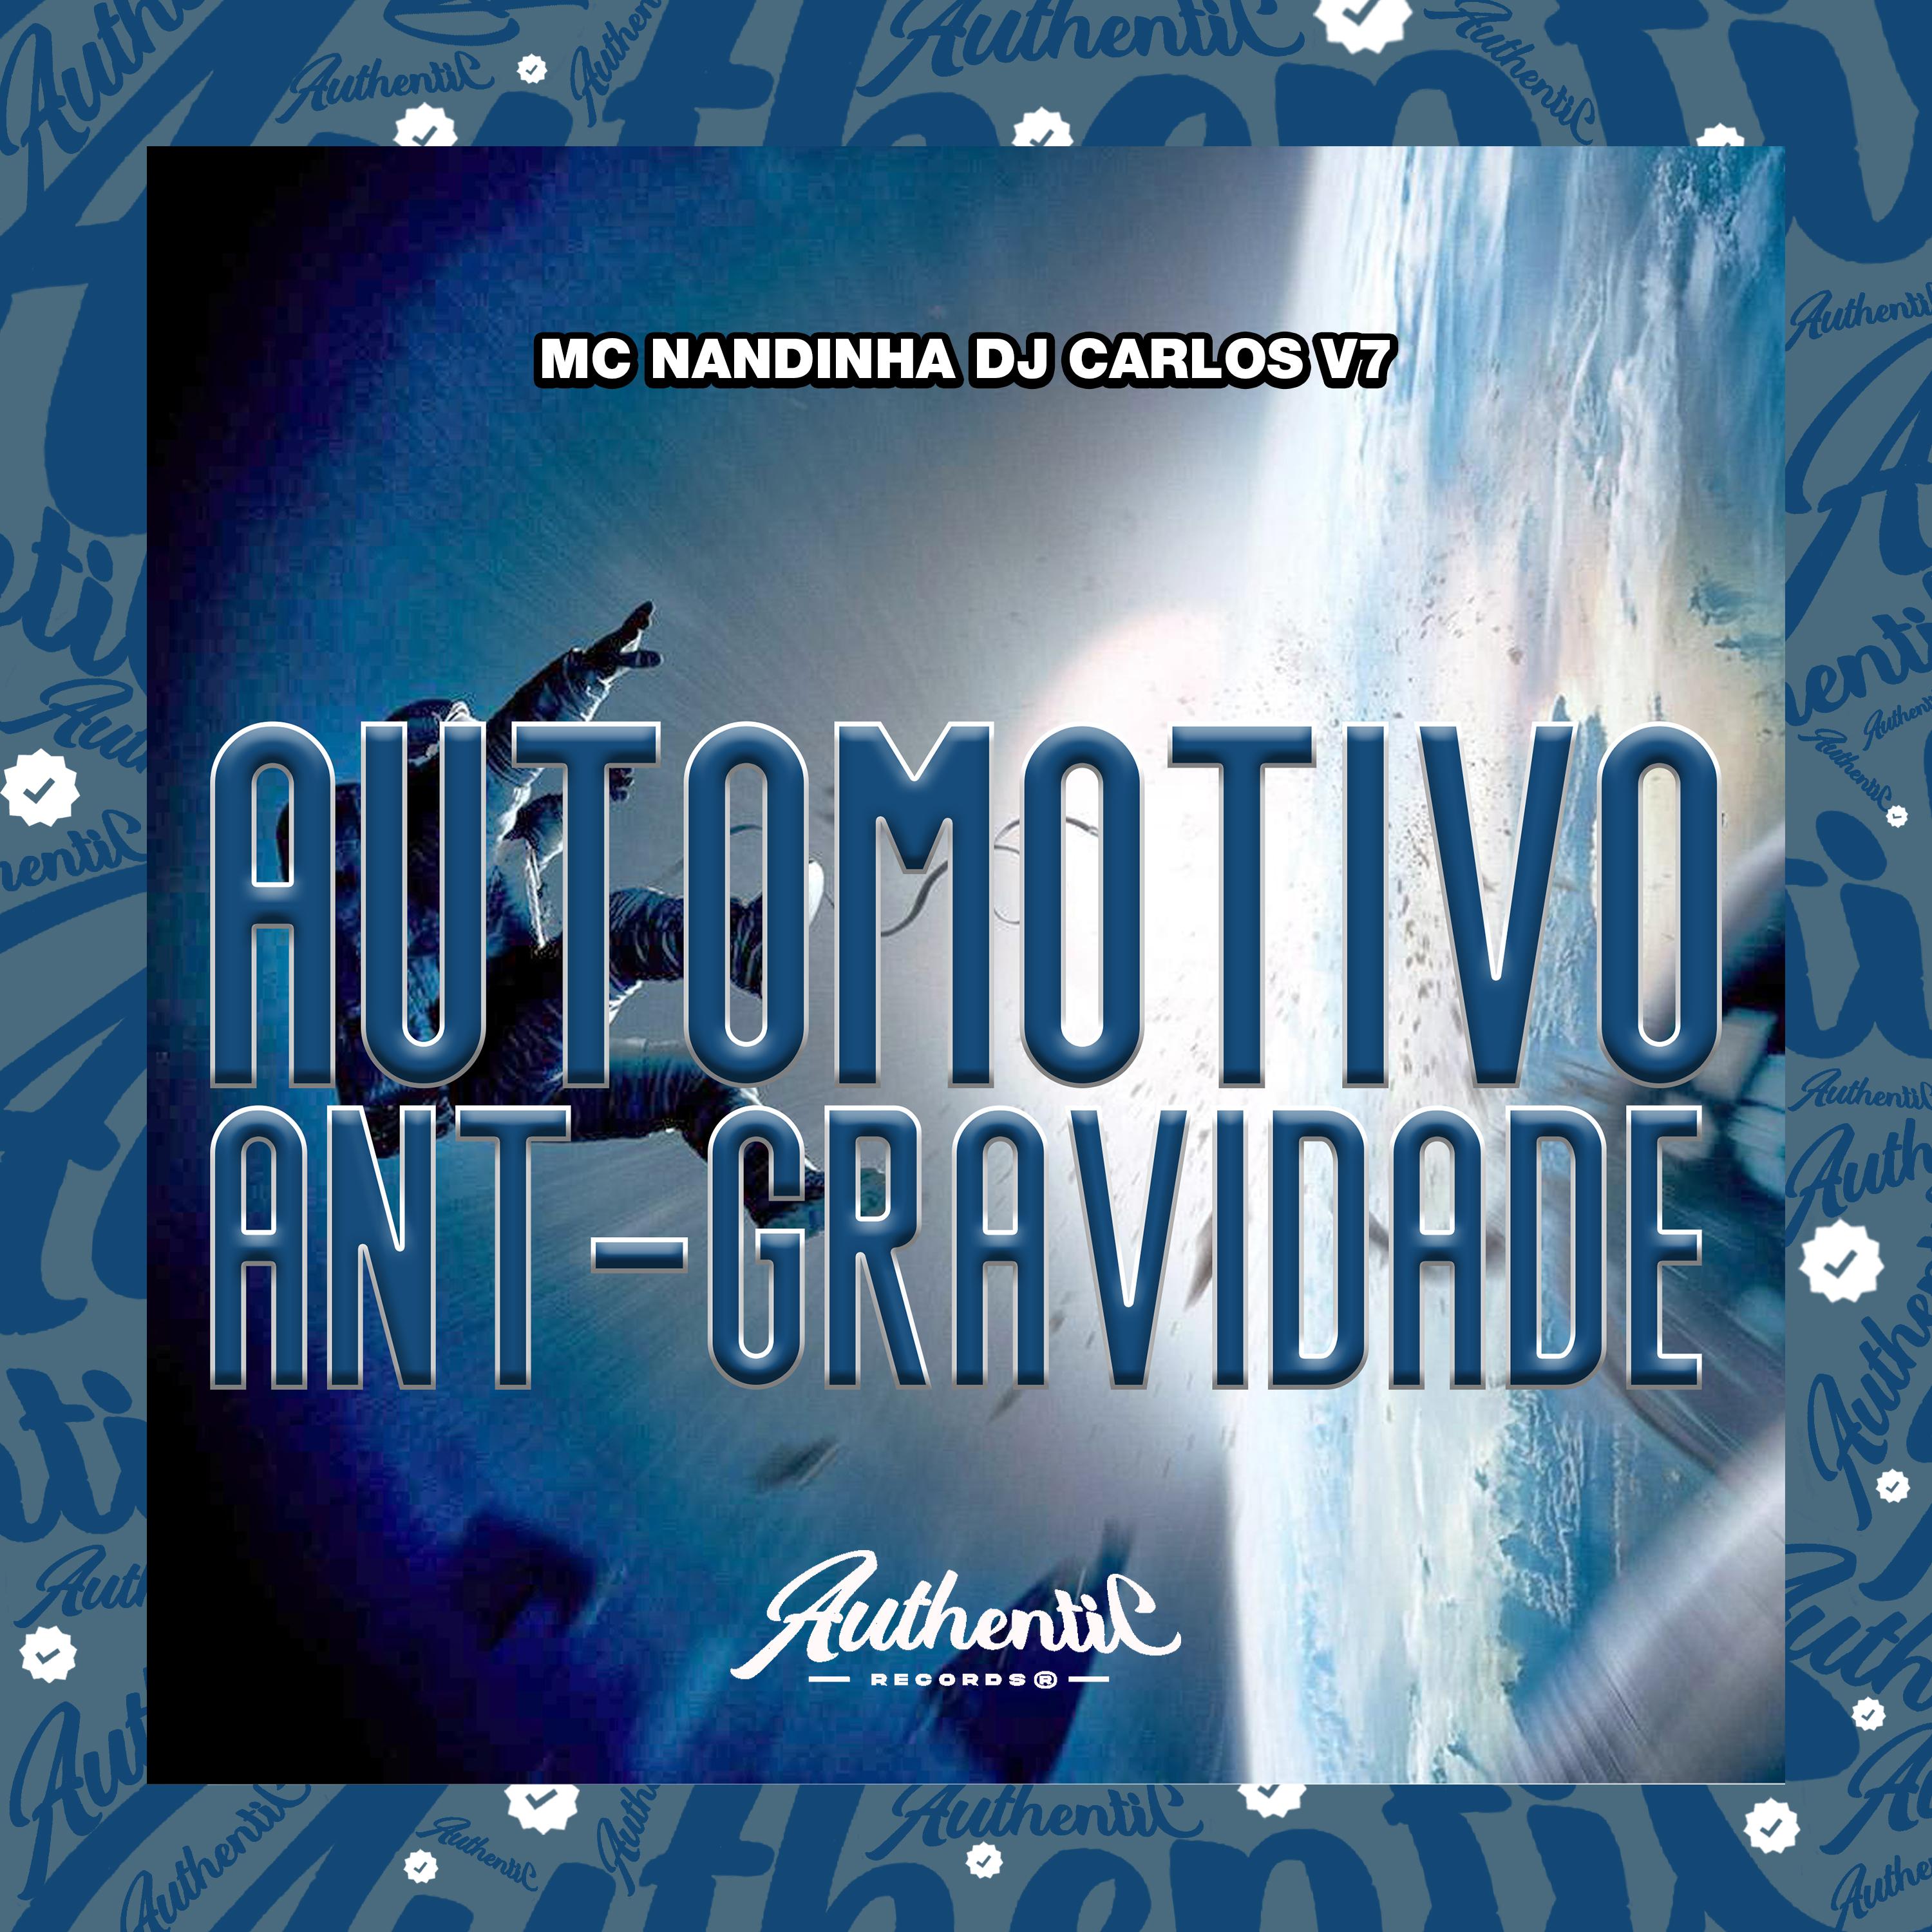 Постер альбома Automotivo Ant-Gravidade